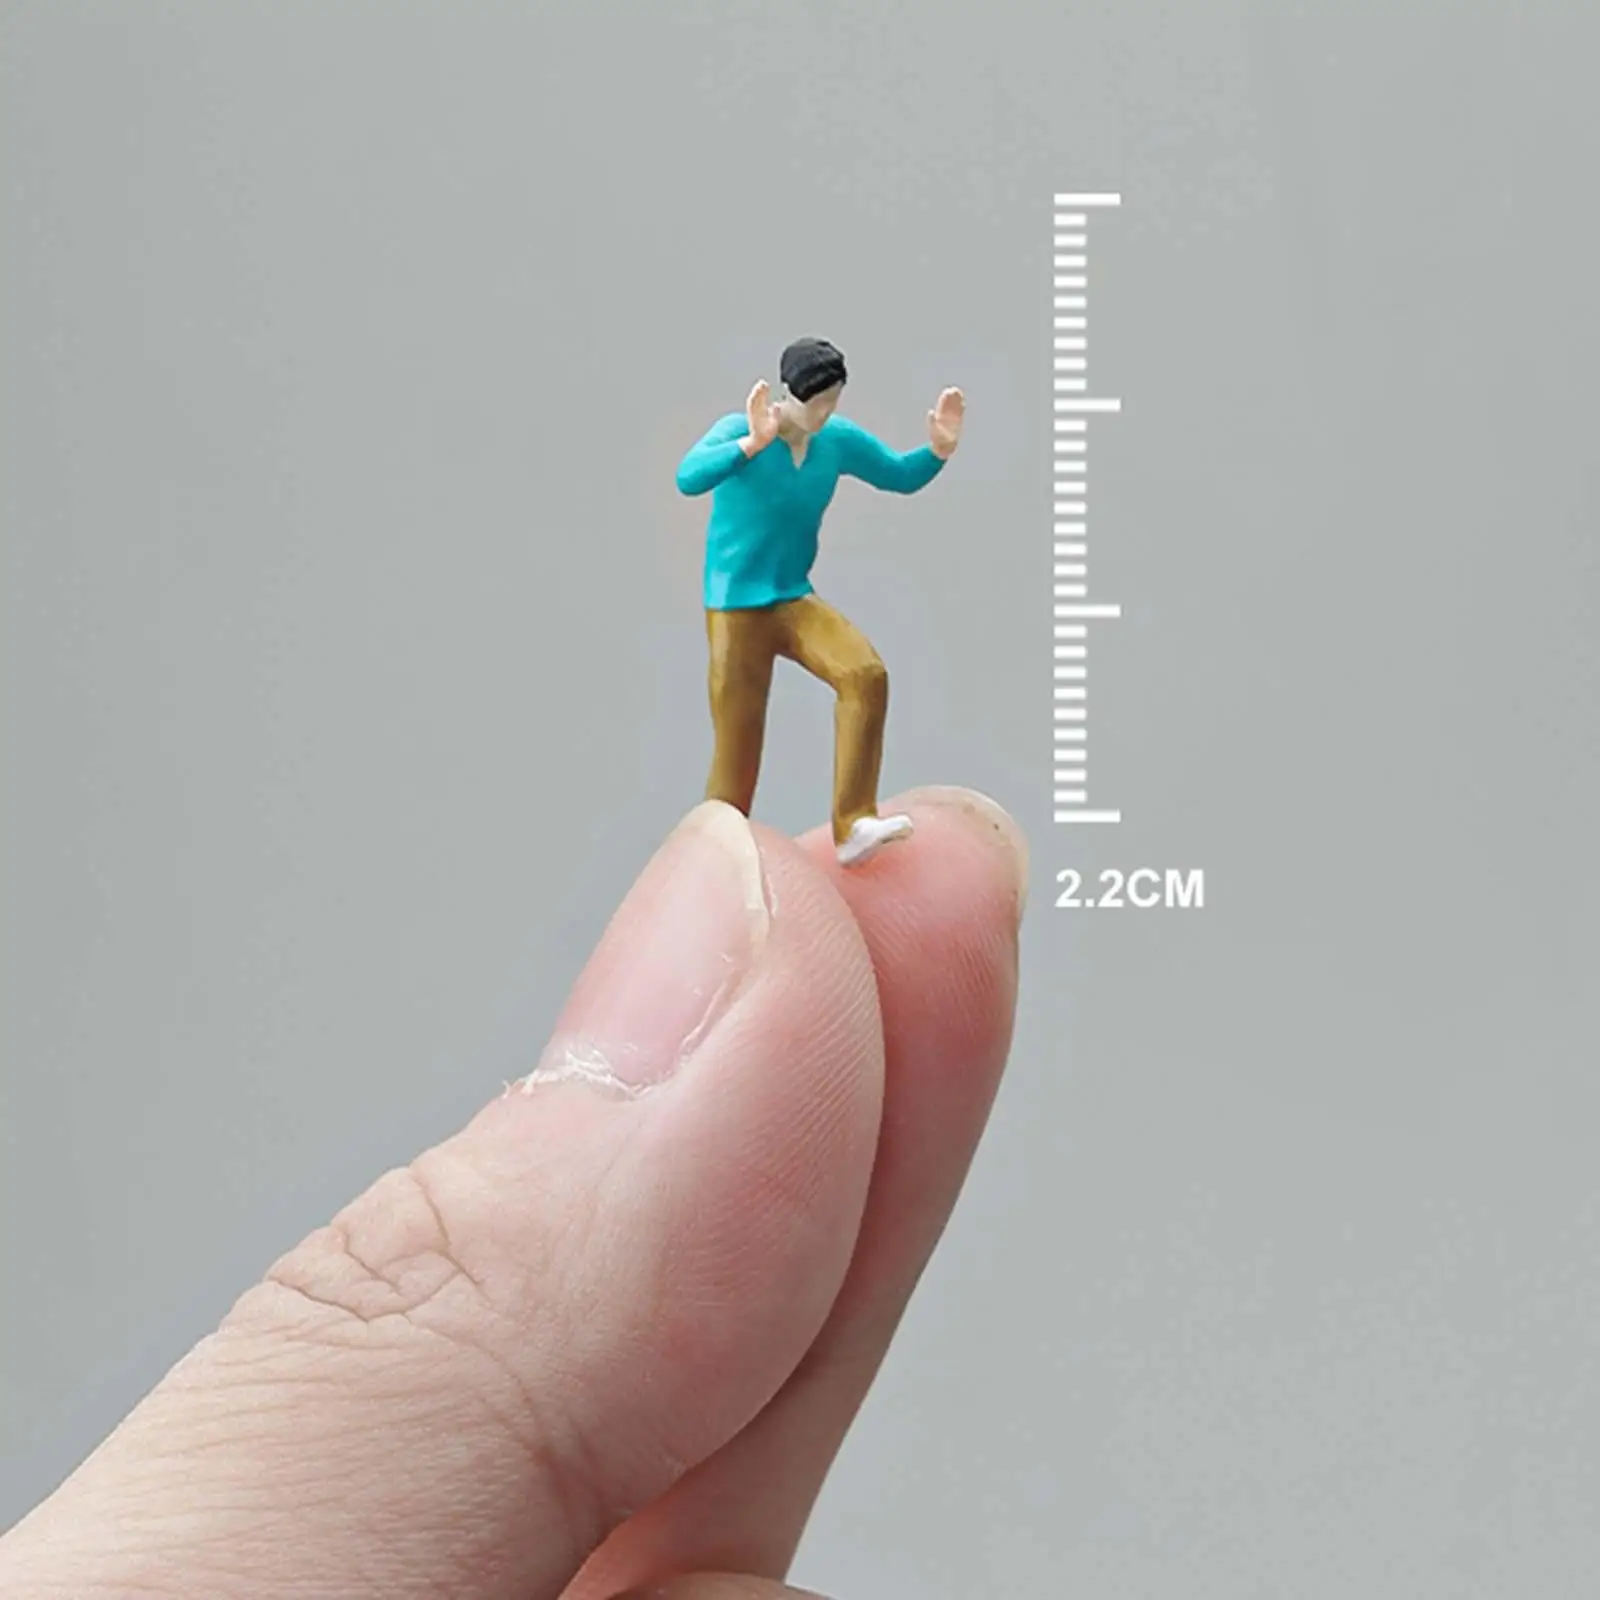 1/64 Miniature Model Figures Mini People Model Simulation Figurines Movie Props Ornament 1/64 Boy Figures Micro Landscapes Decor